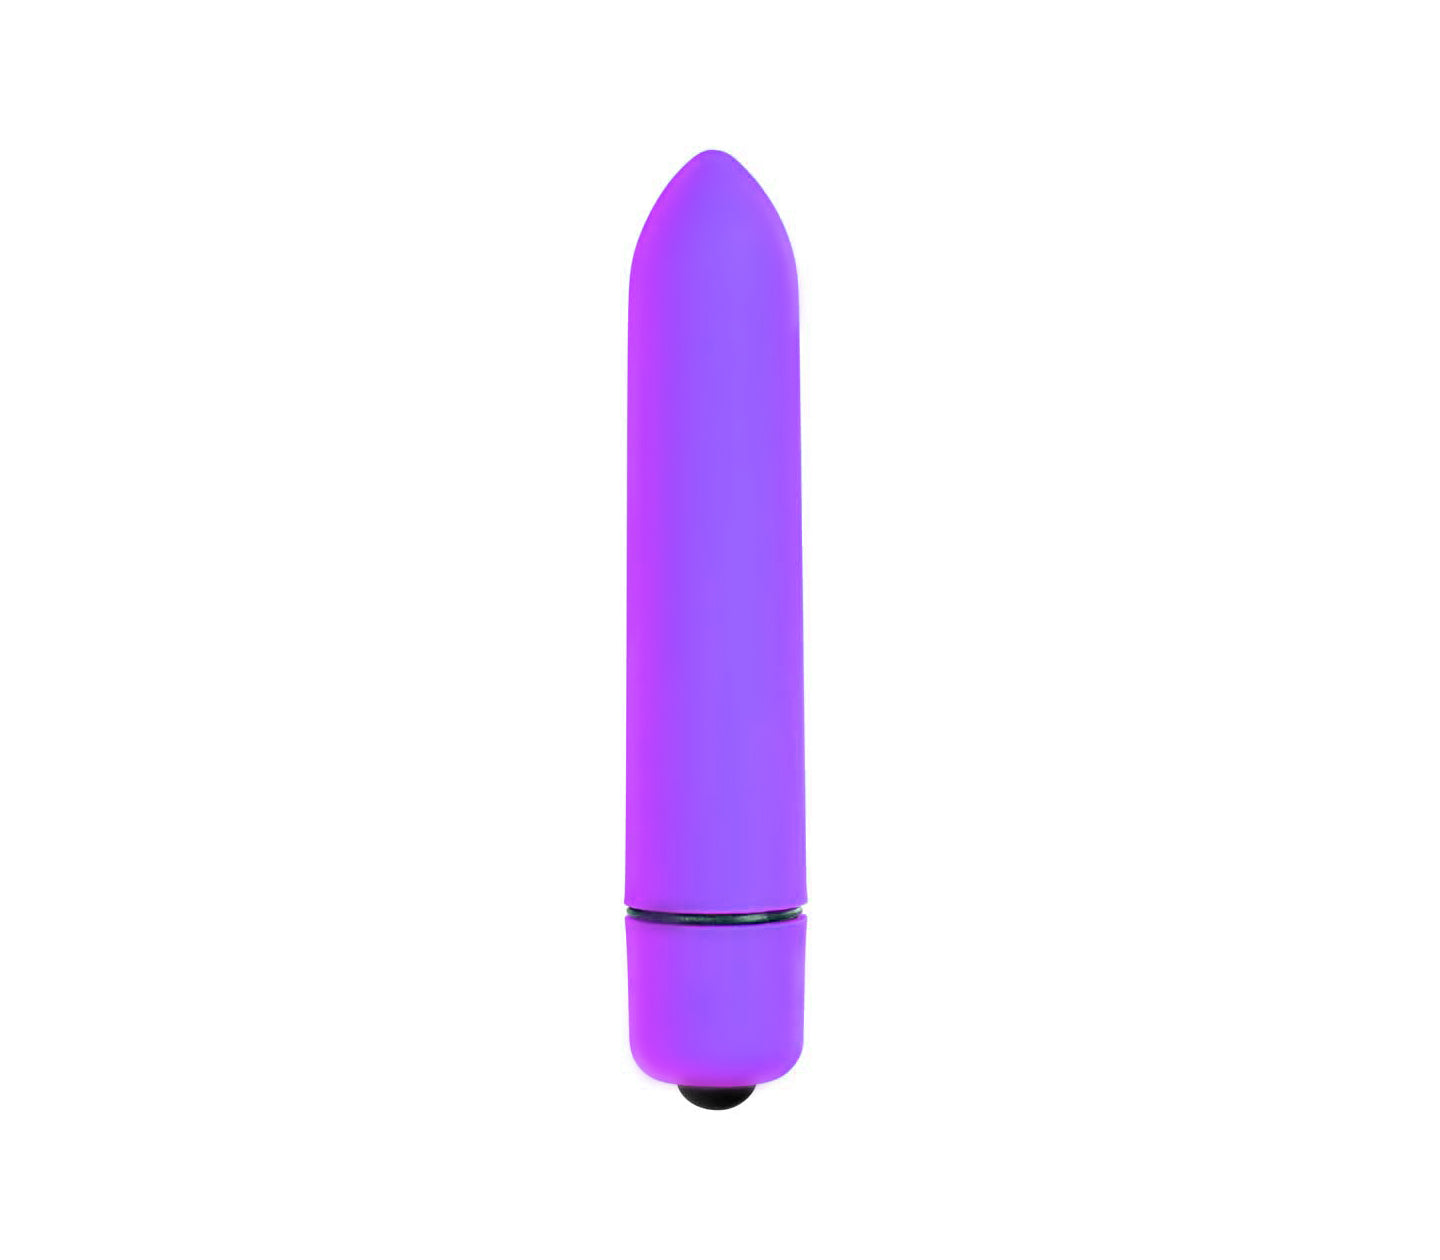 Bul001-10 Speed Bullet W/ 7 Functions Vibrator Purple - Club X